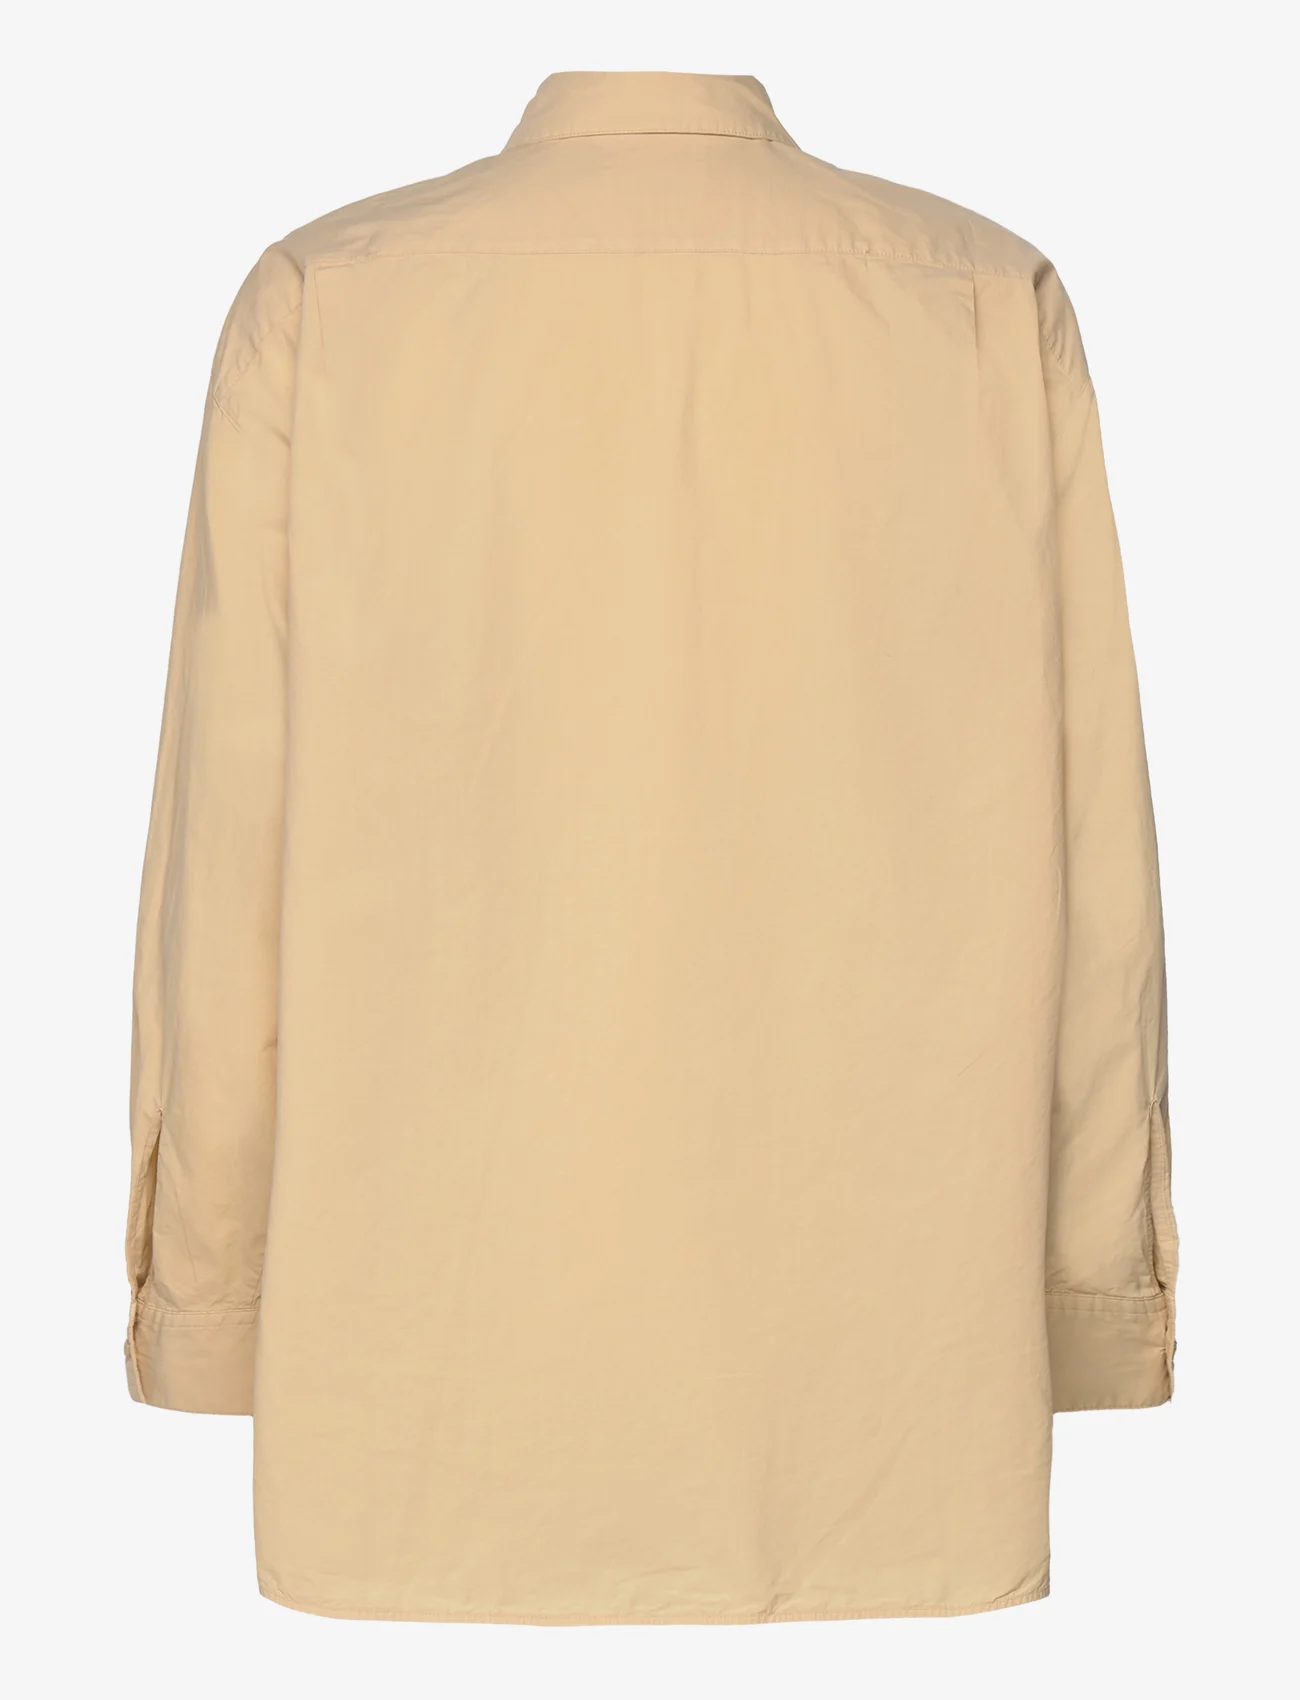 Marimekko - GRISTE SOLID - pitkähihaiset paidat - beige - 1